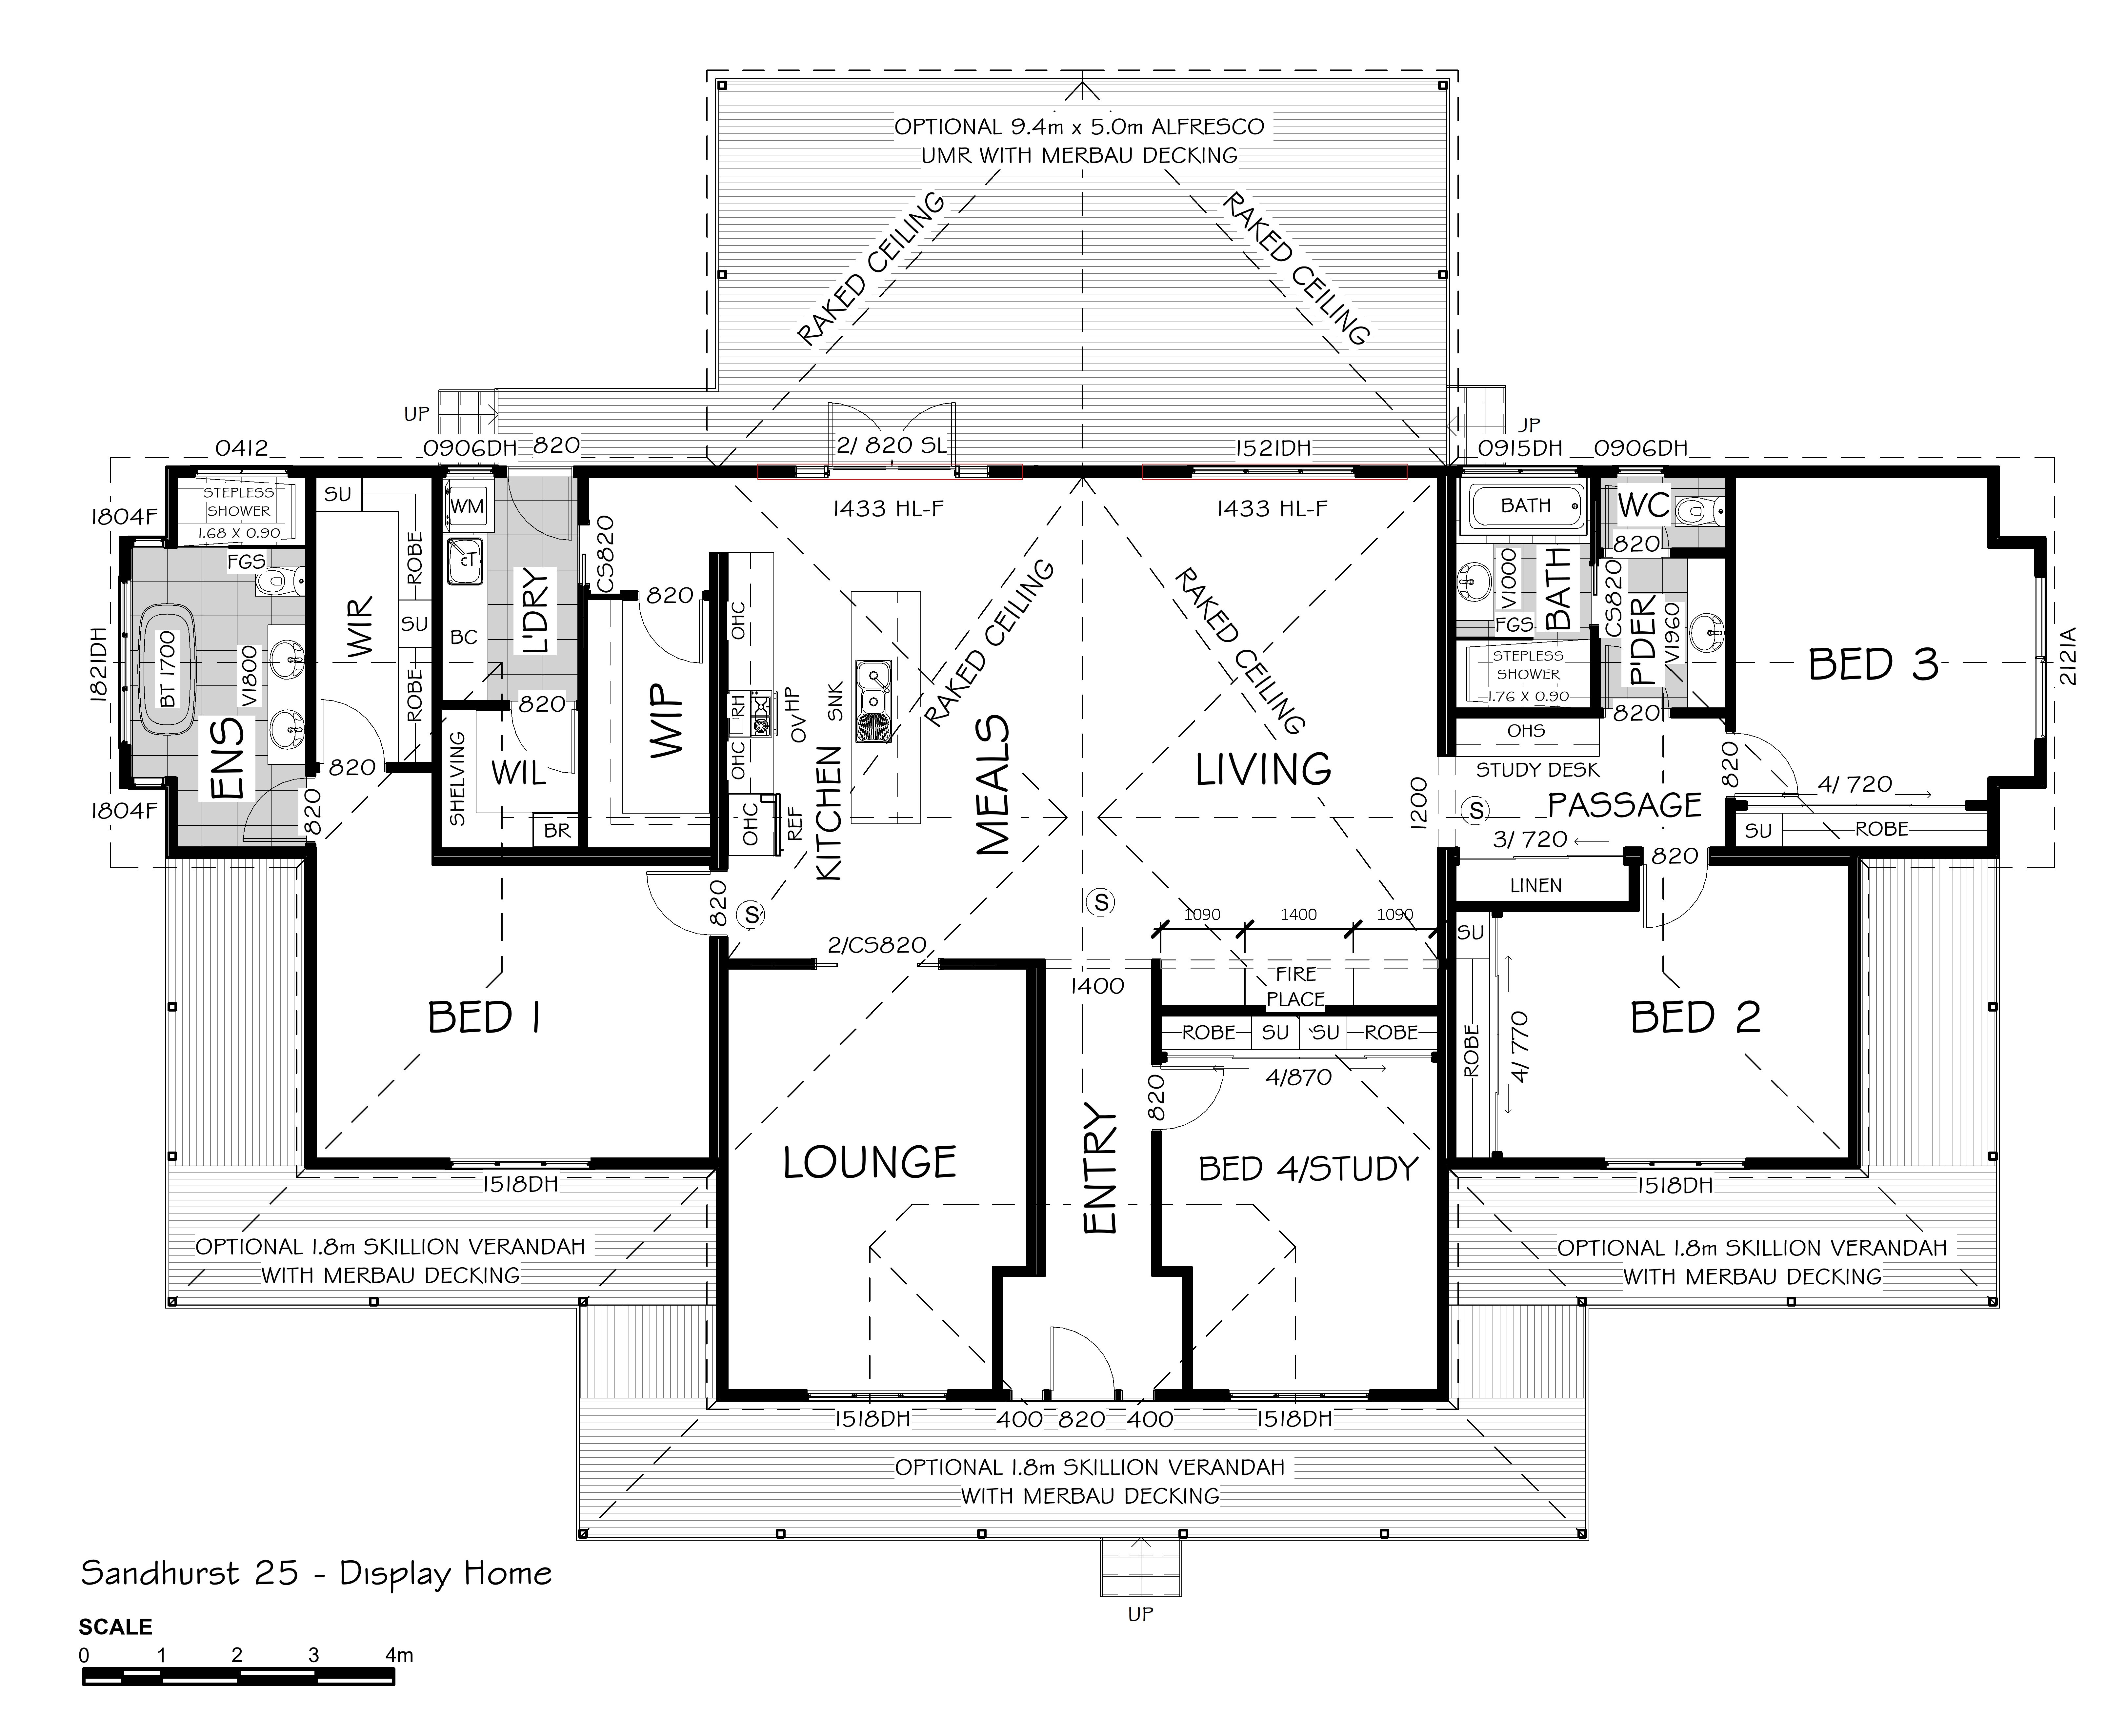 SANDHURST 25 - DISPLAY HOME floor plan